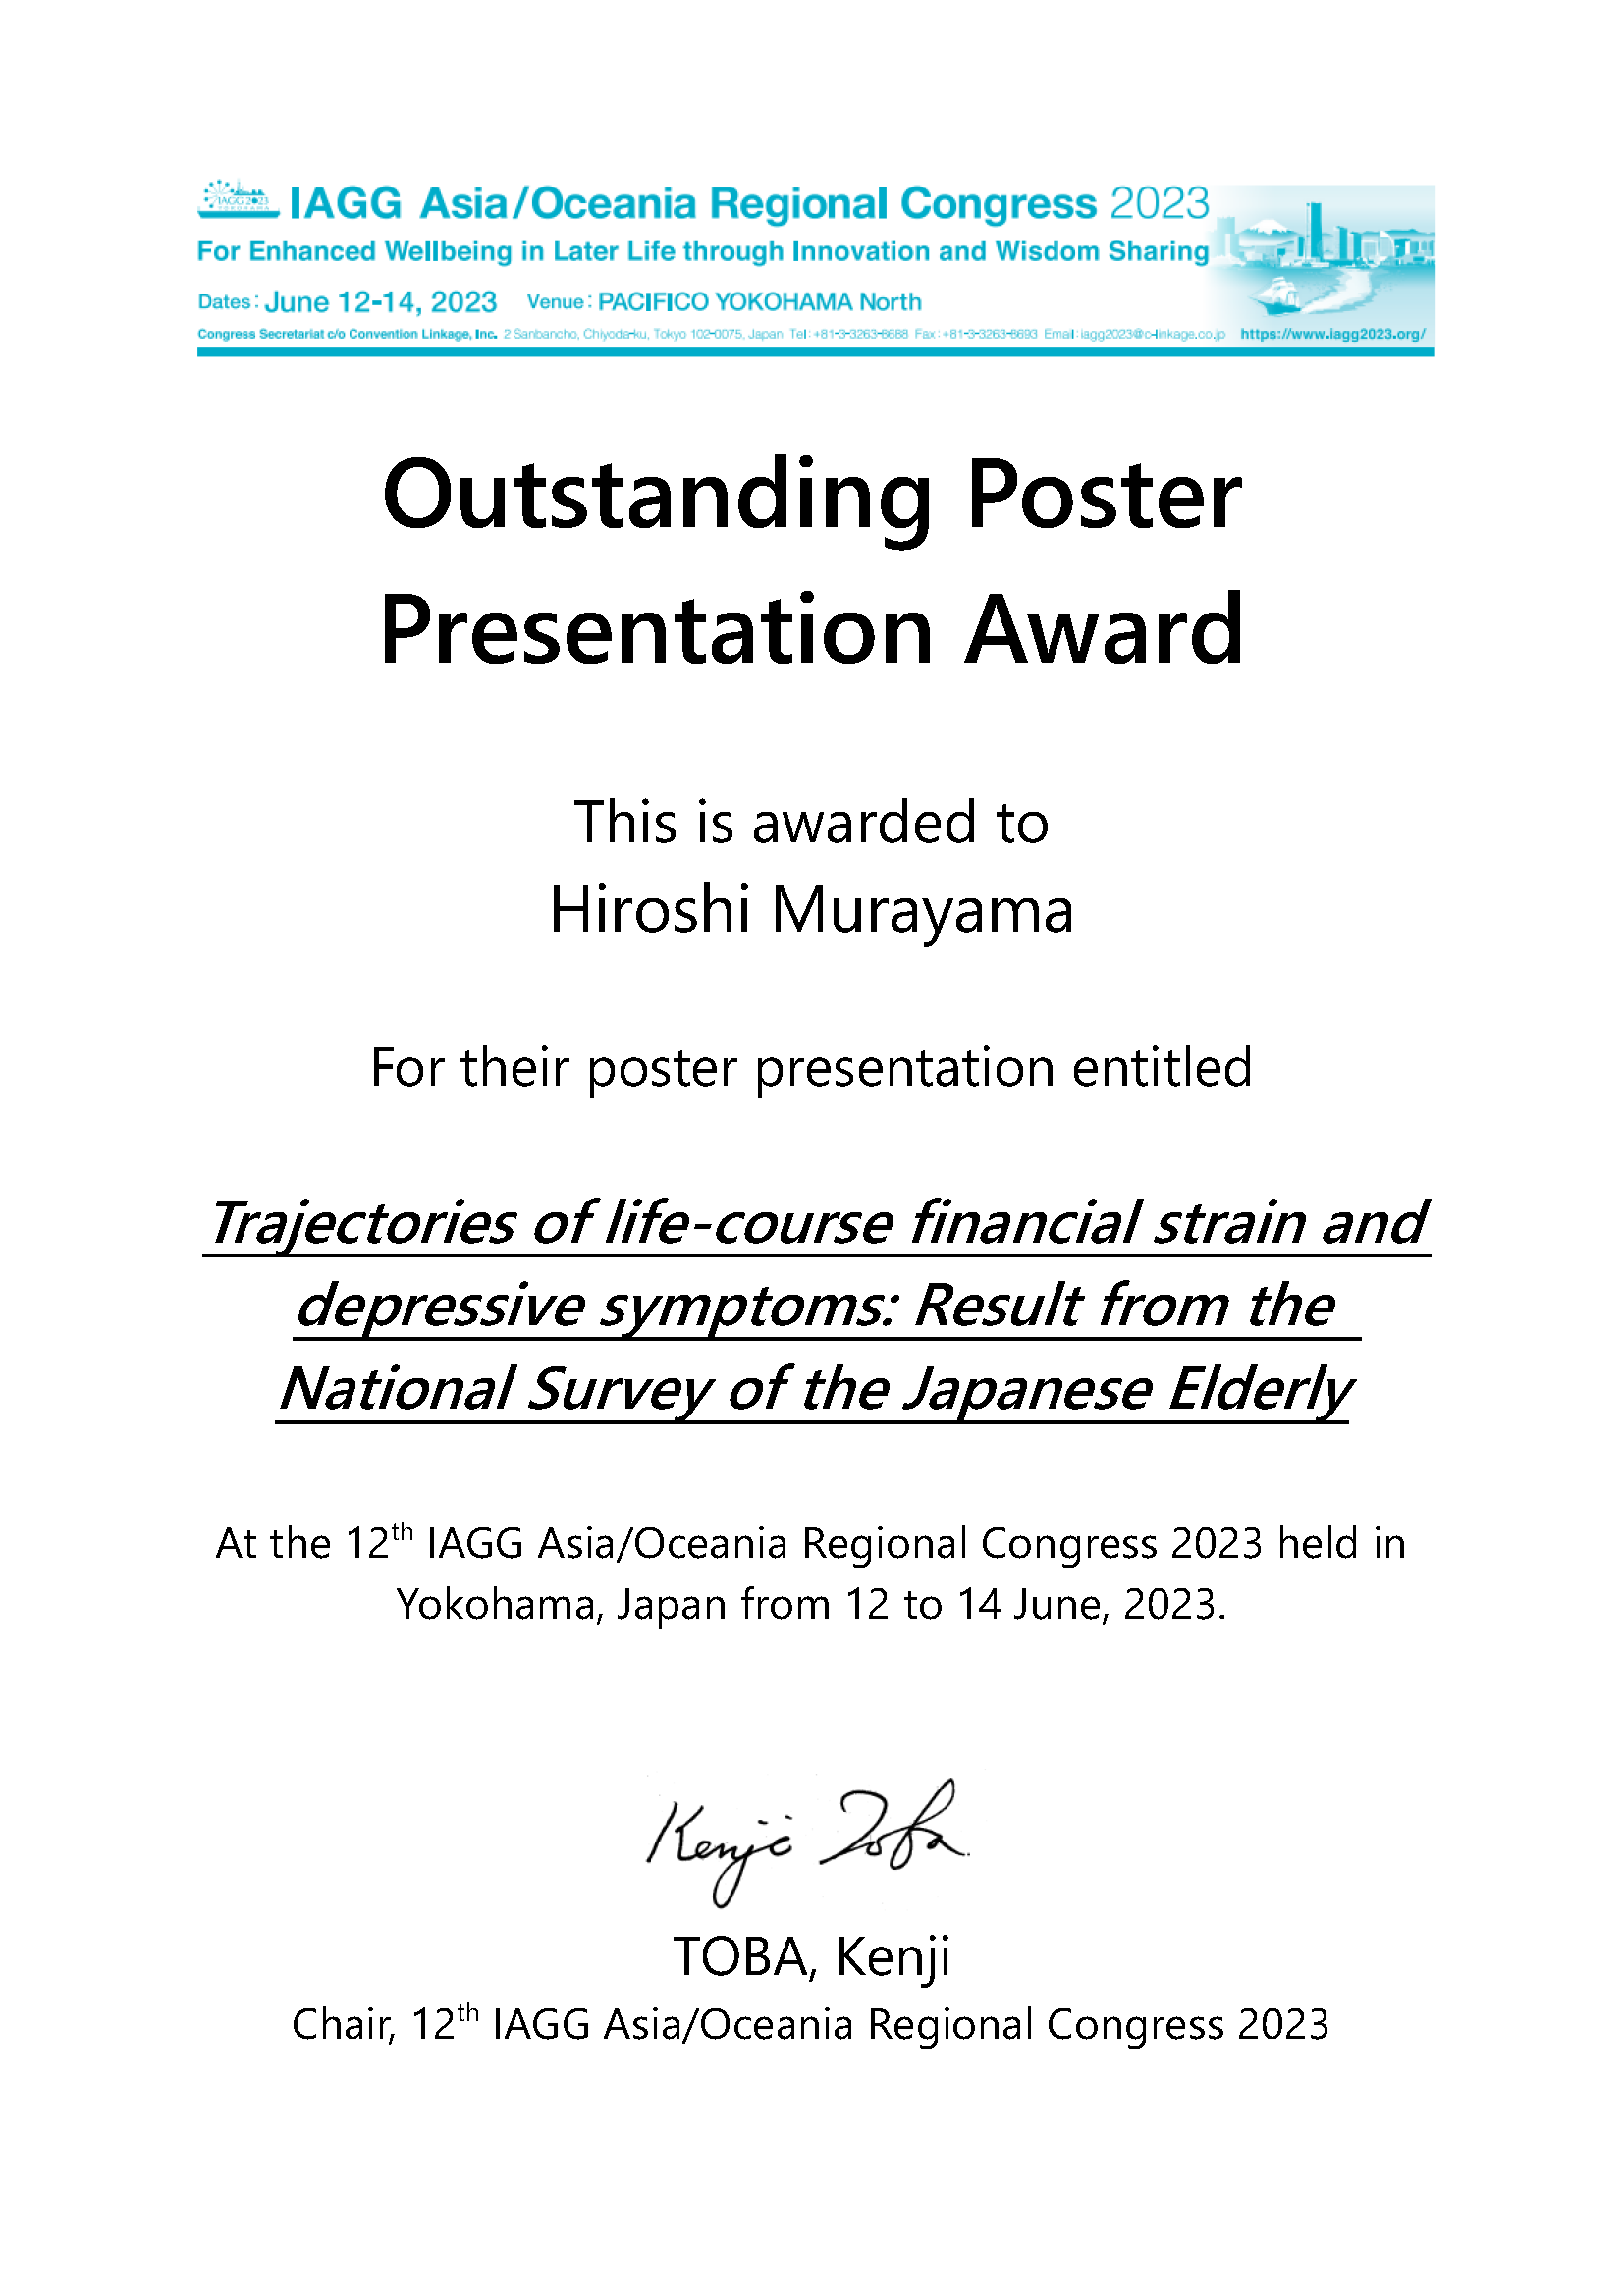 Outstanding Poster Presentation Award_480_Hiroshi Murayama.png